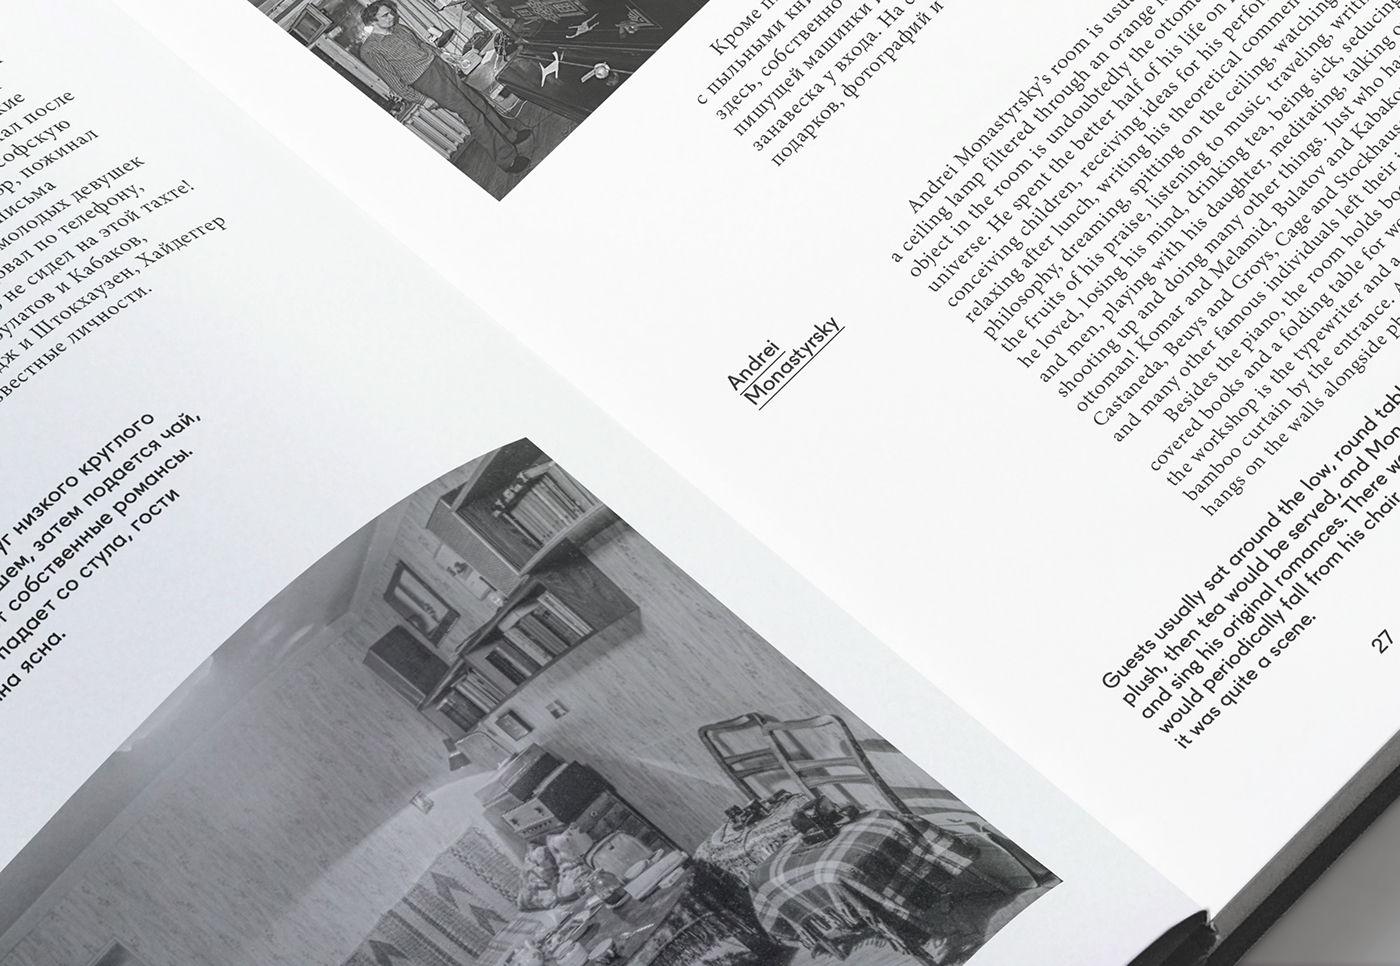 Insider Exhibition book book design George Kiesewalter contemporary art Garage Museum ussr artists